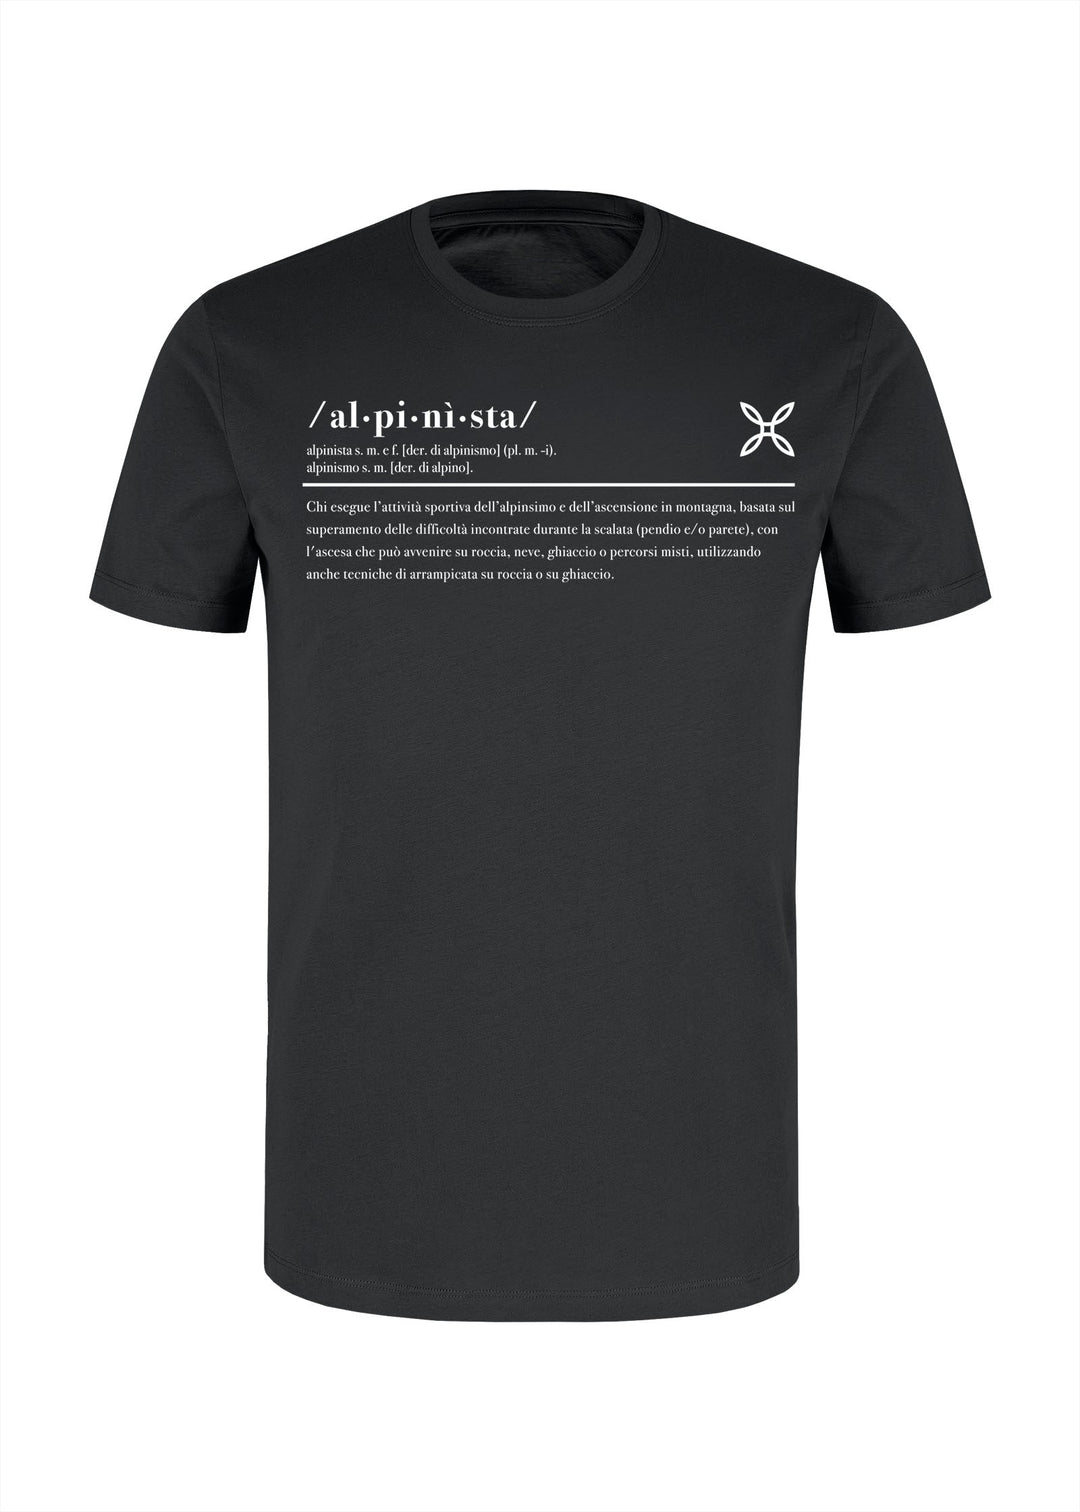 Alpinist T-Shirt - Ardesia Delave' (91D) - Blogside